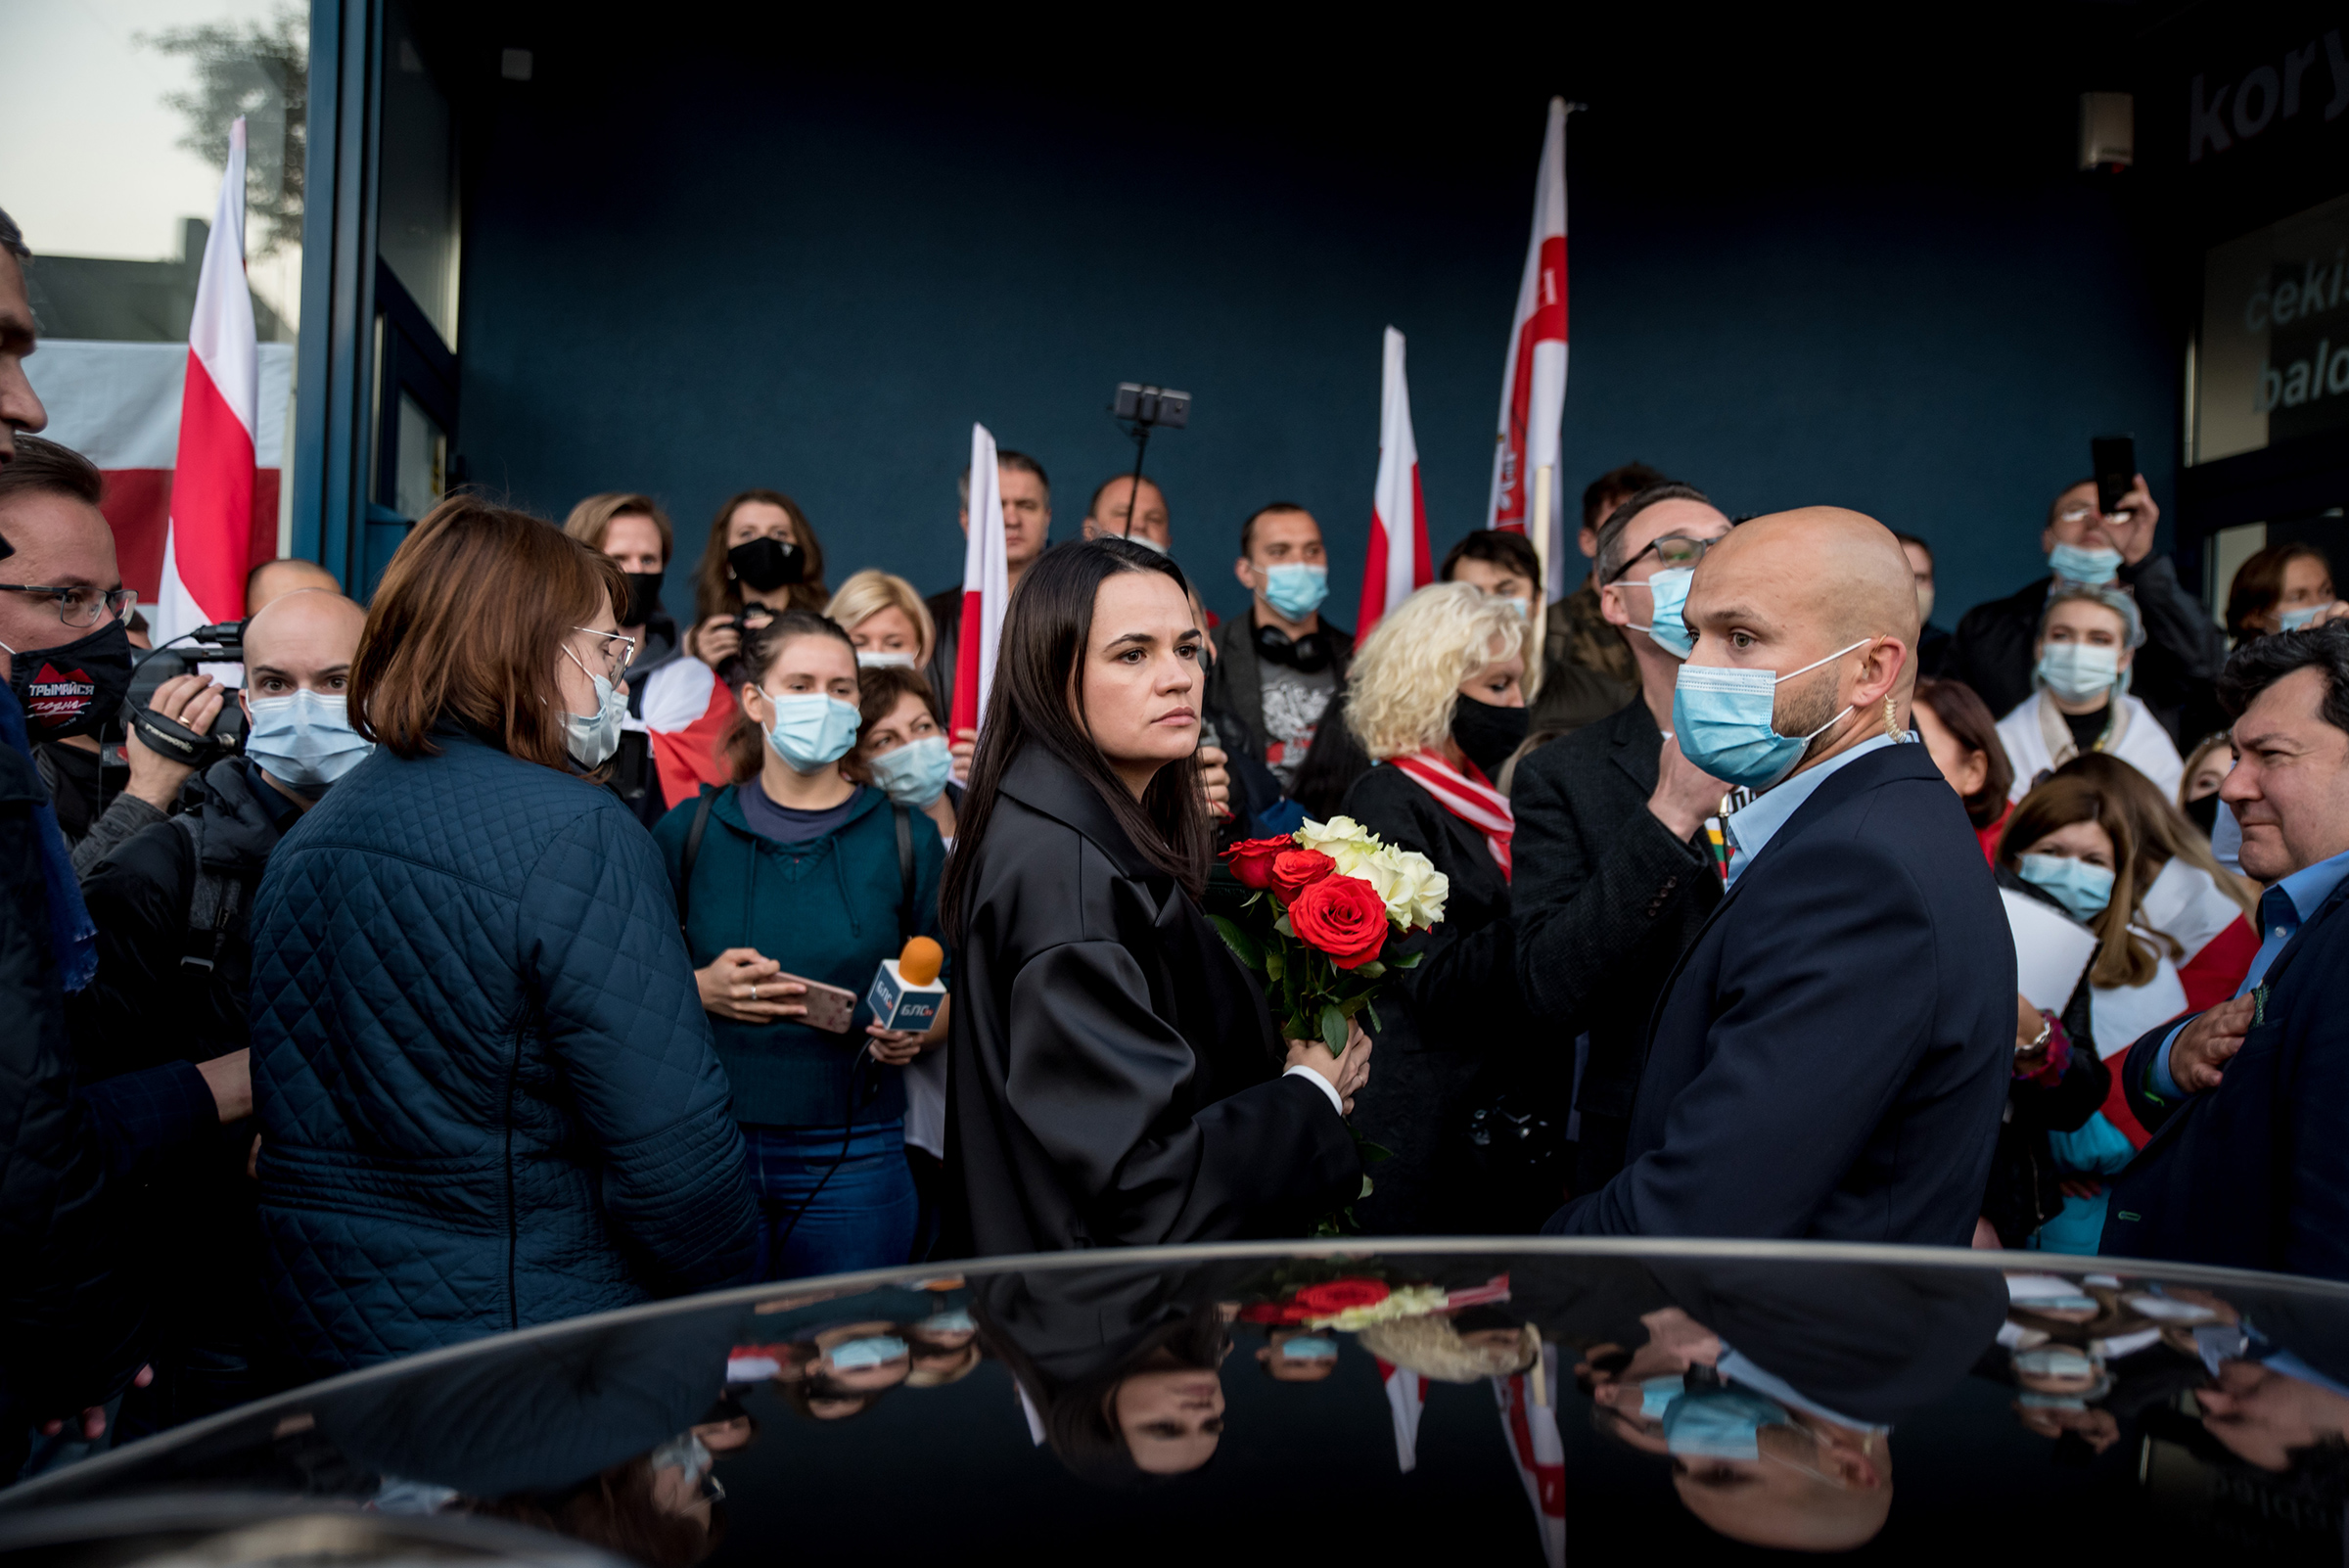 In October 2020, Svetlana Tikhanovskaya, the exiled opposition leader of Belarus, attends a protest in Vilnius, Lithuania, against political repression in Belarus. (Arturas Morozovas—Getty Images)